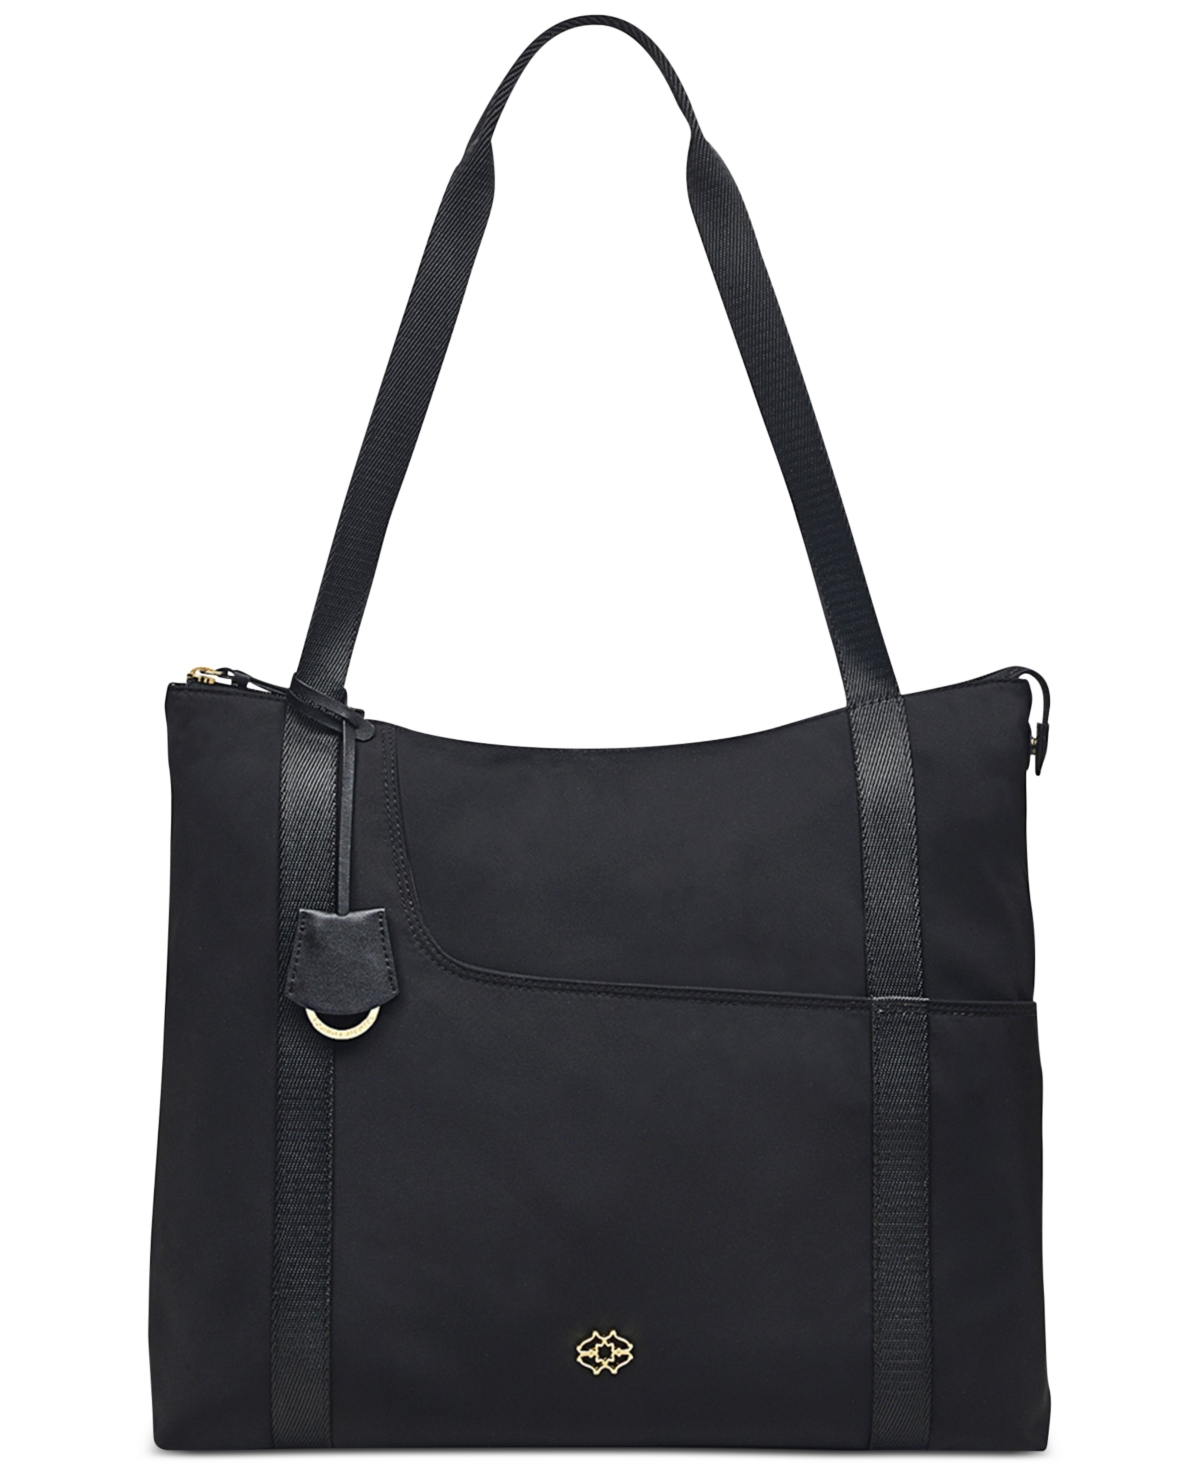 Ziptop Nylon Shoulder Bag - Black